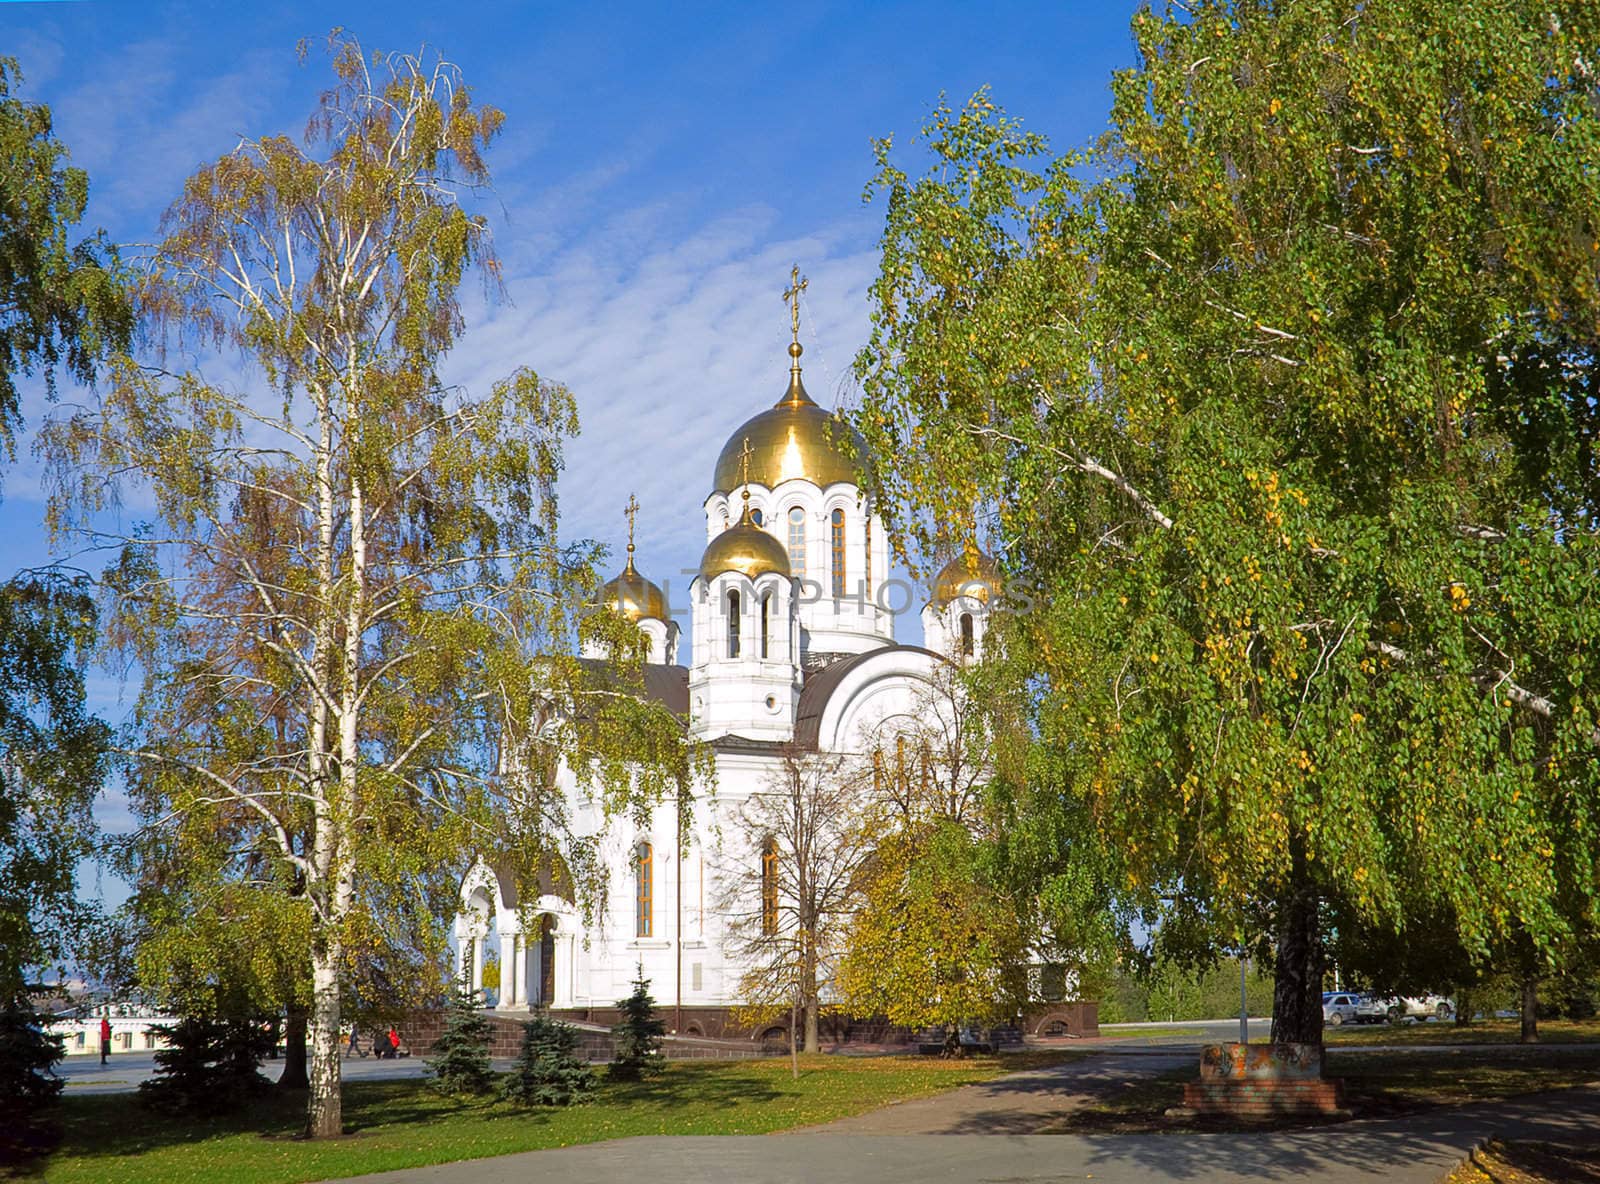 Fine orthodox church among turning yellow trees